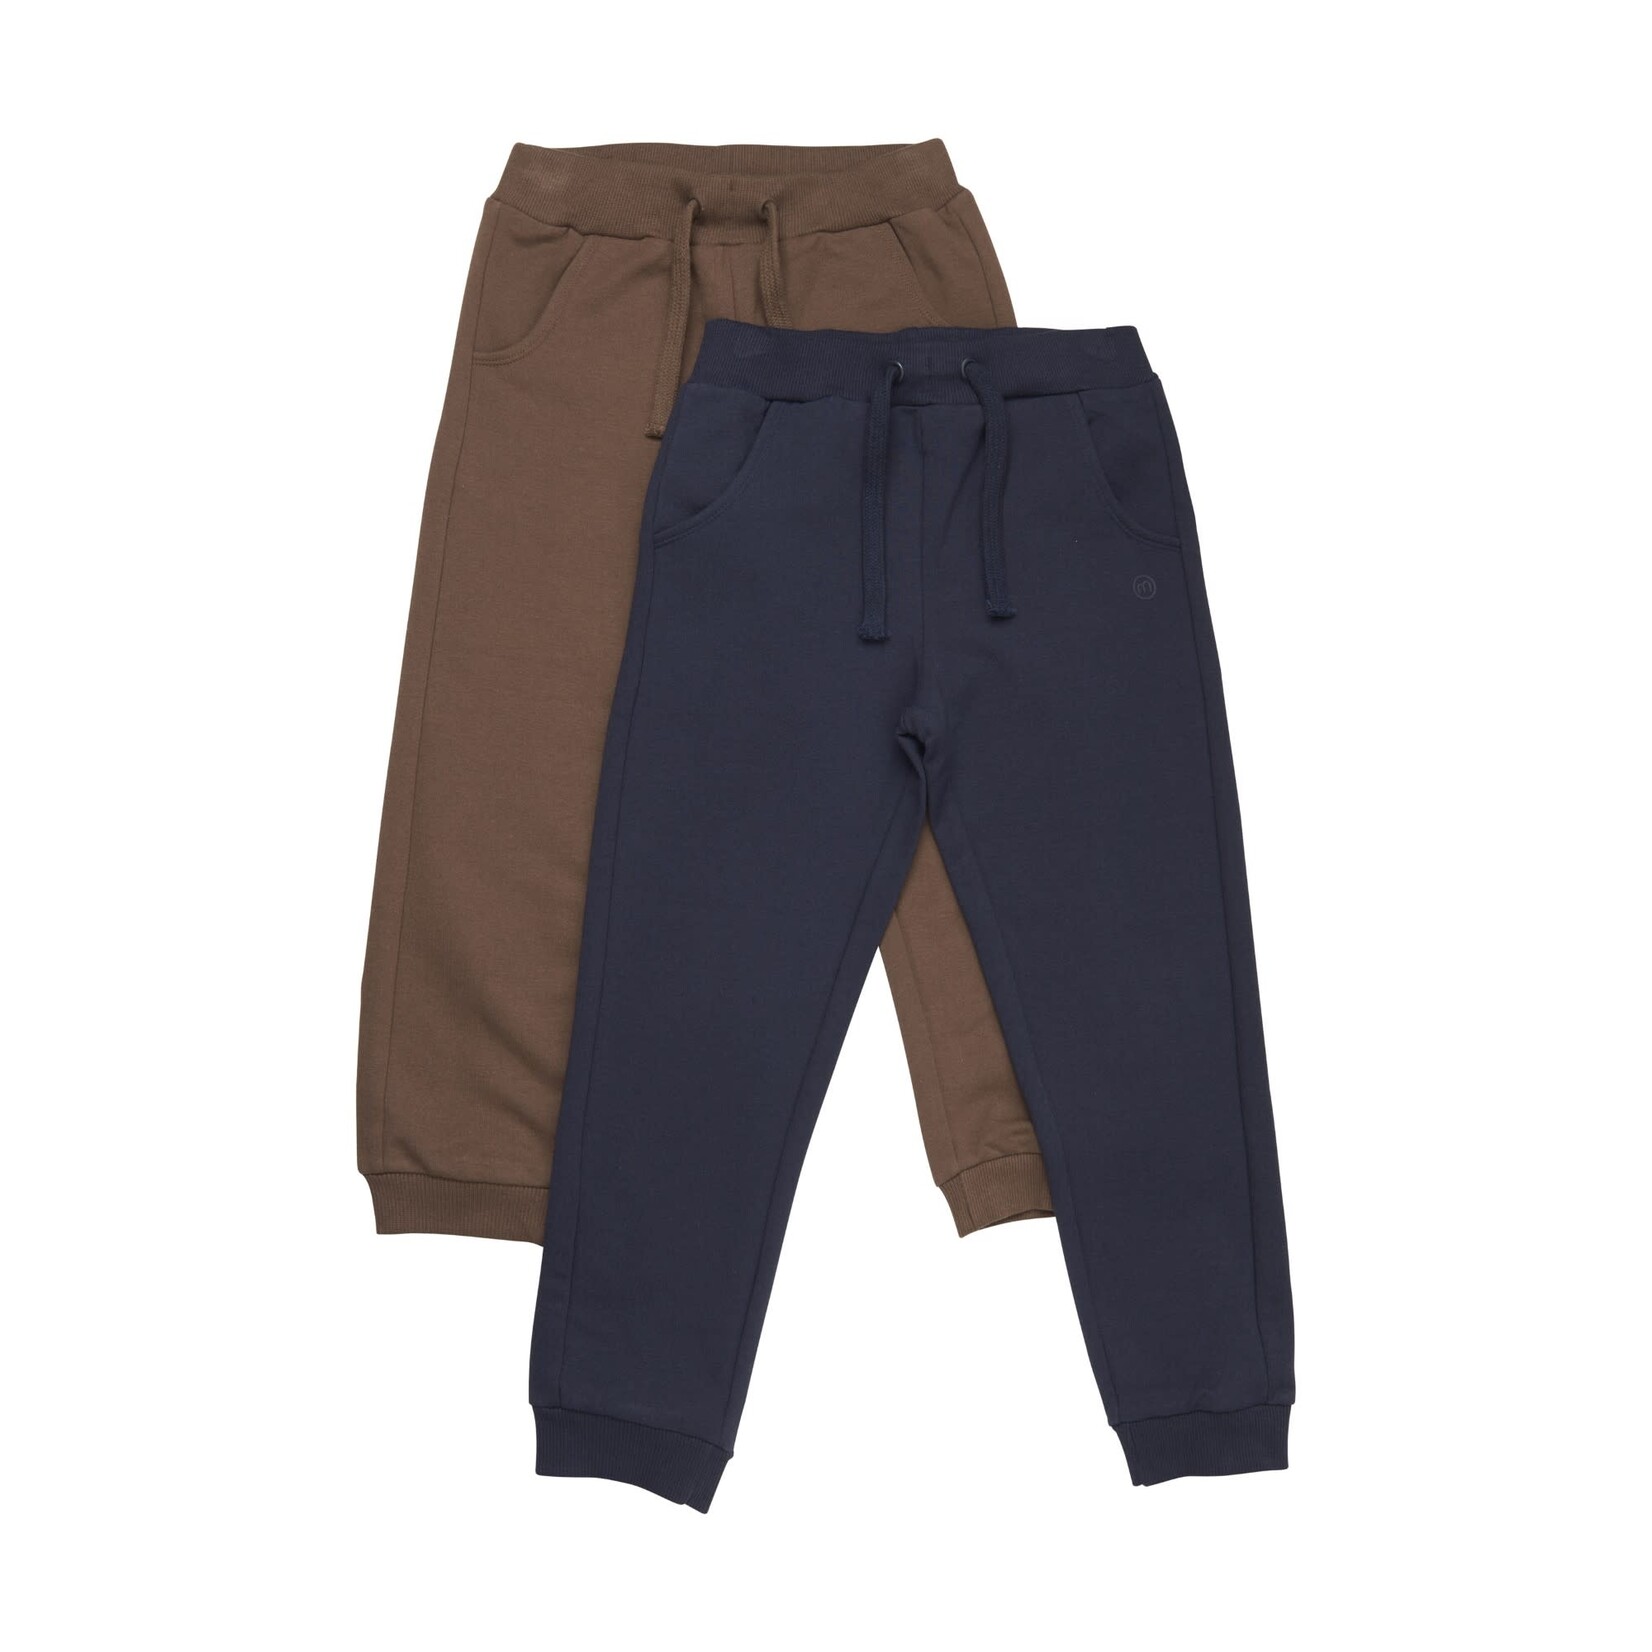 Minymo MINYMO - Set of 2 organic cotton jogging pants - navy blue and chocolate